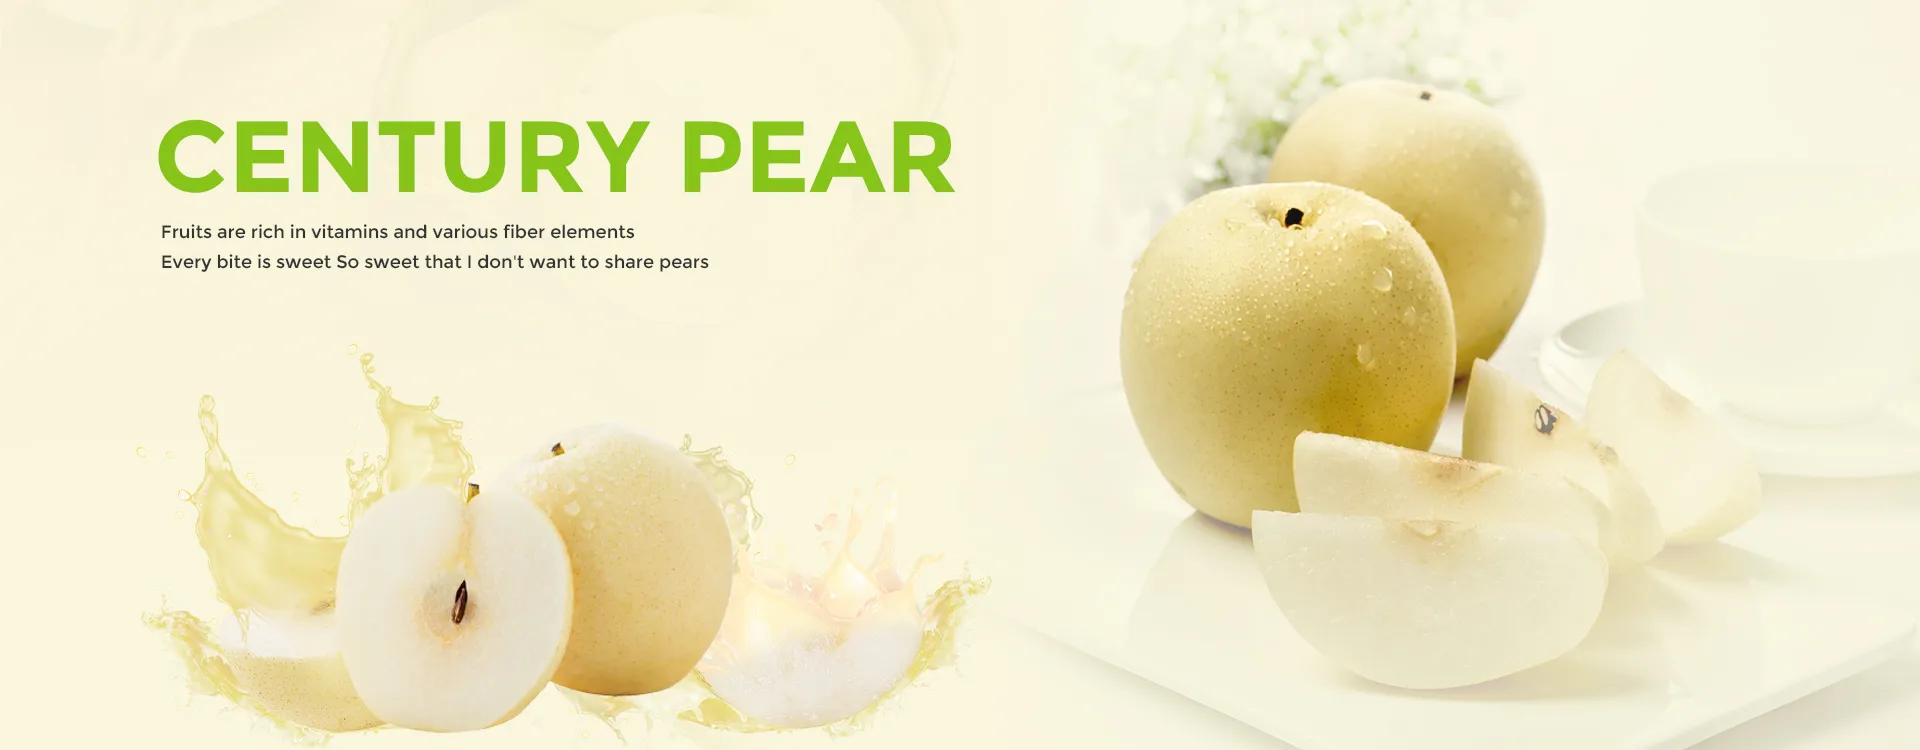 New Century Pear